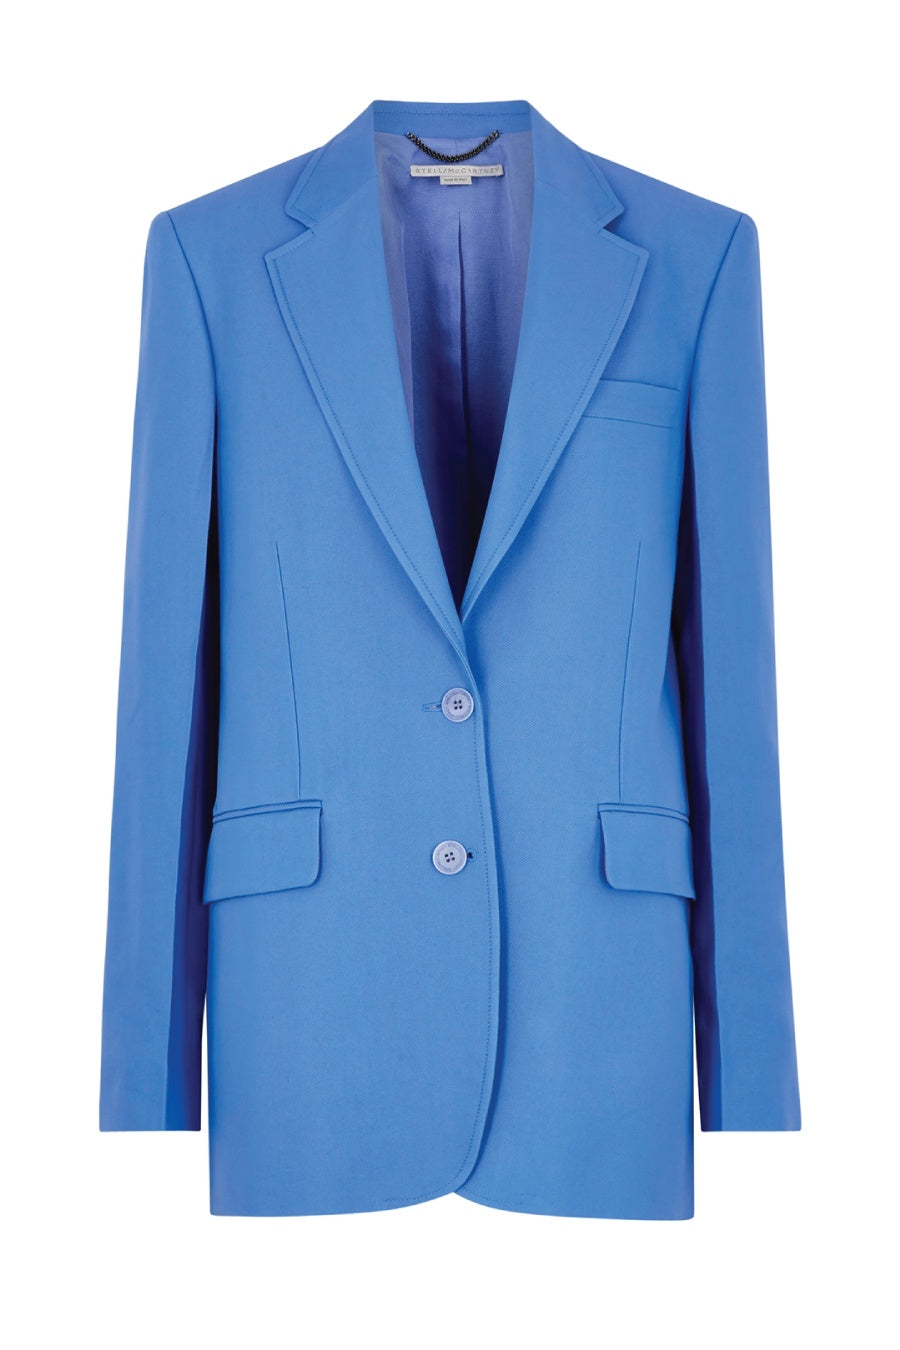 Stella McCartney Twill Tailoring Blazer - Cornflower Blue